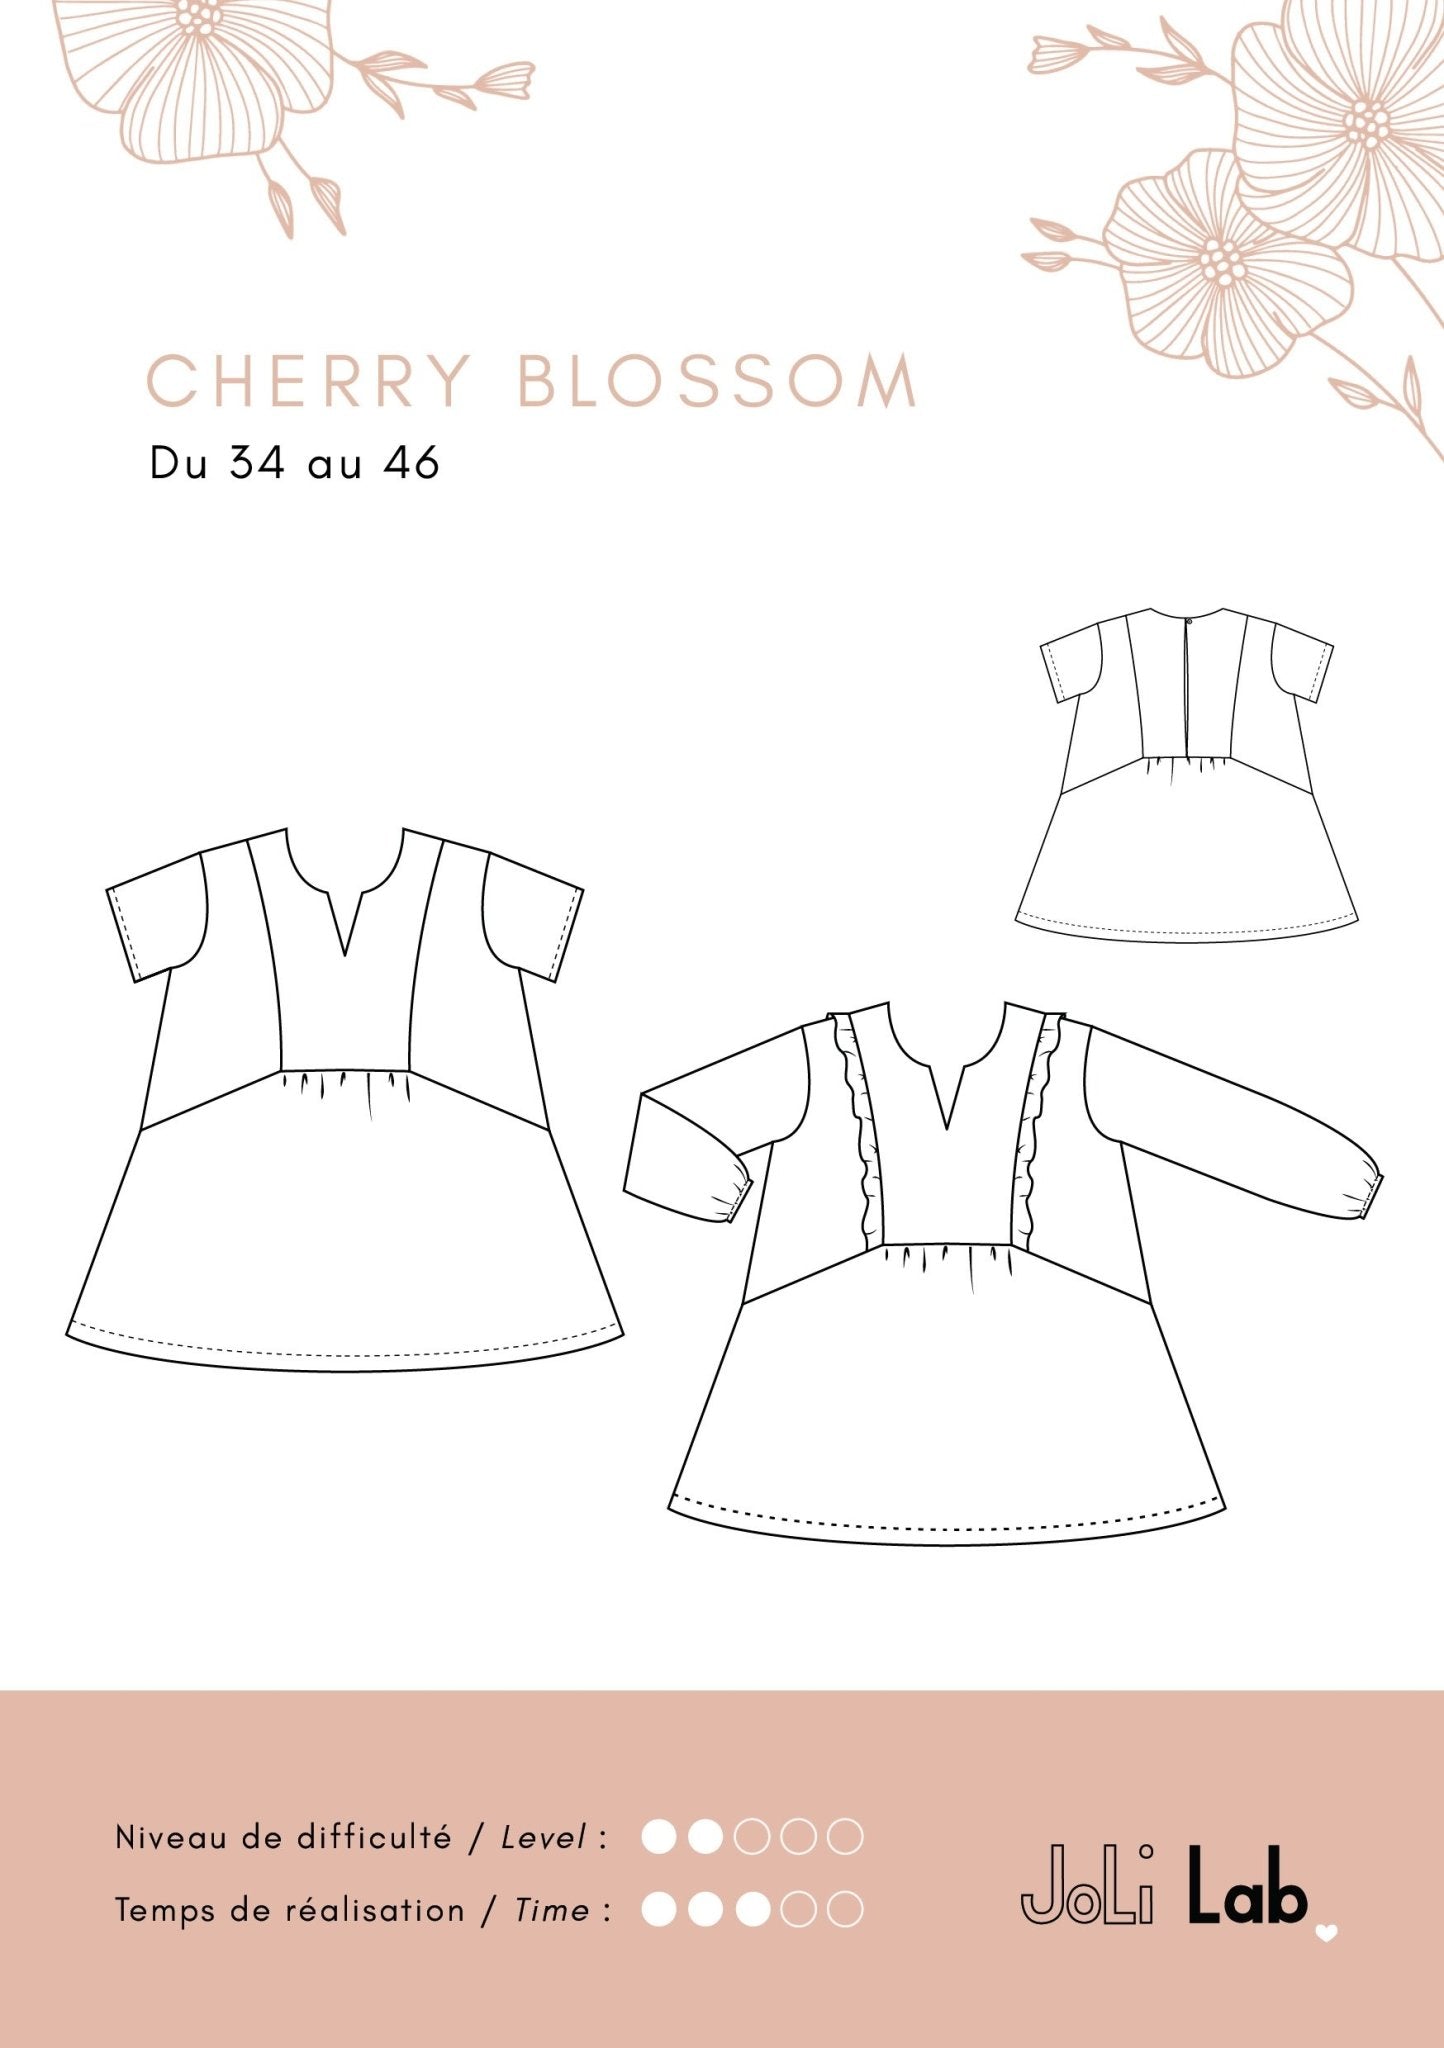 Cherry Blossom Blouse - pattern PDF or paper - Joli Lab